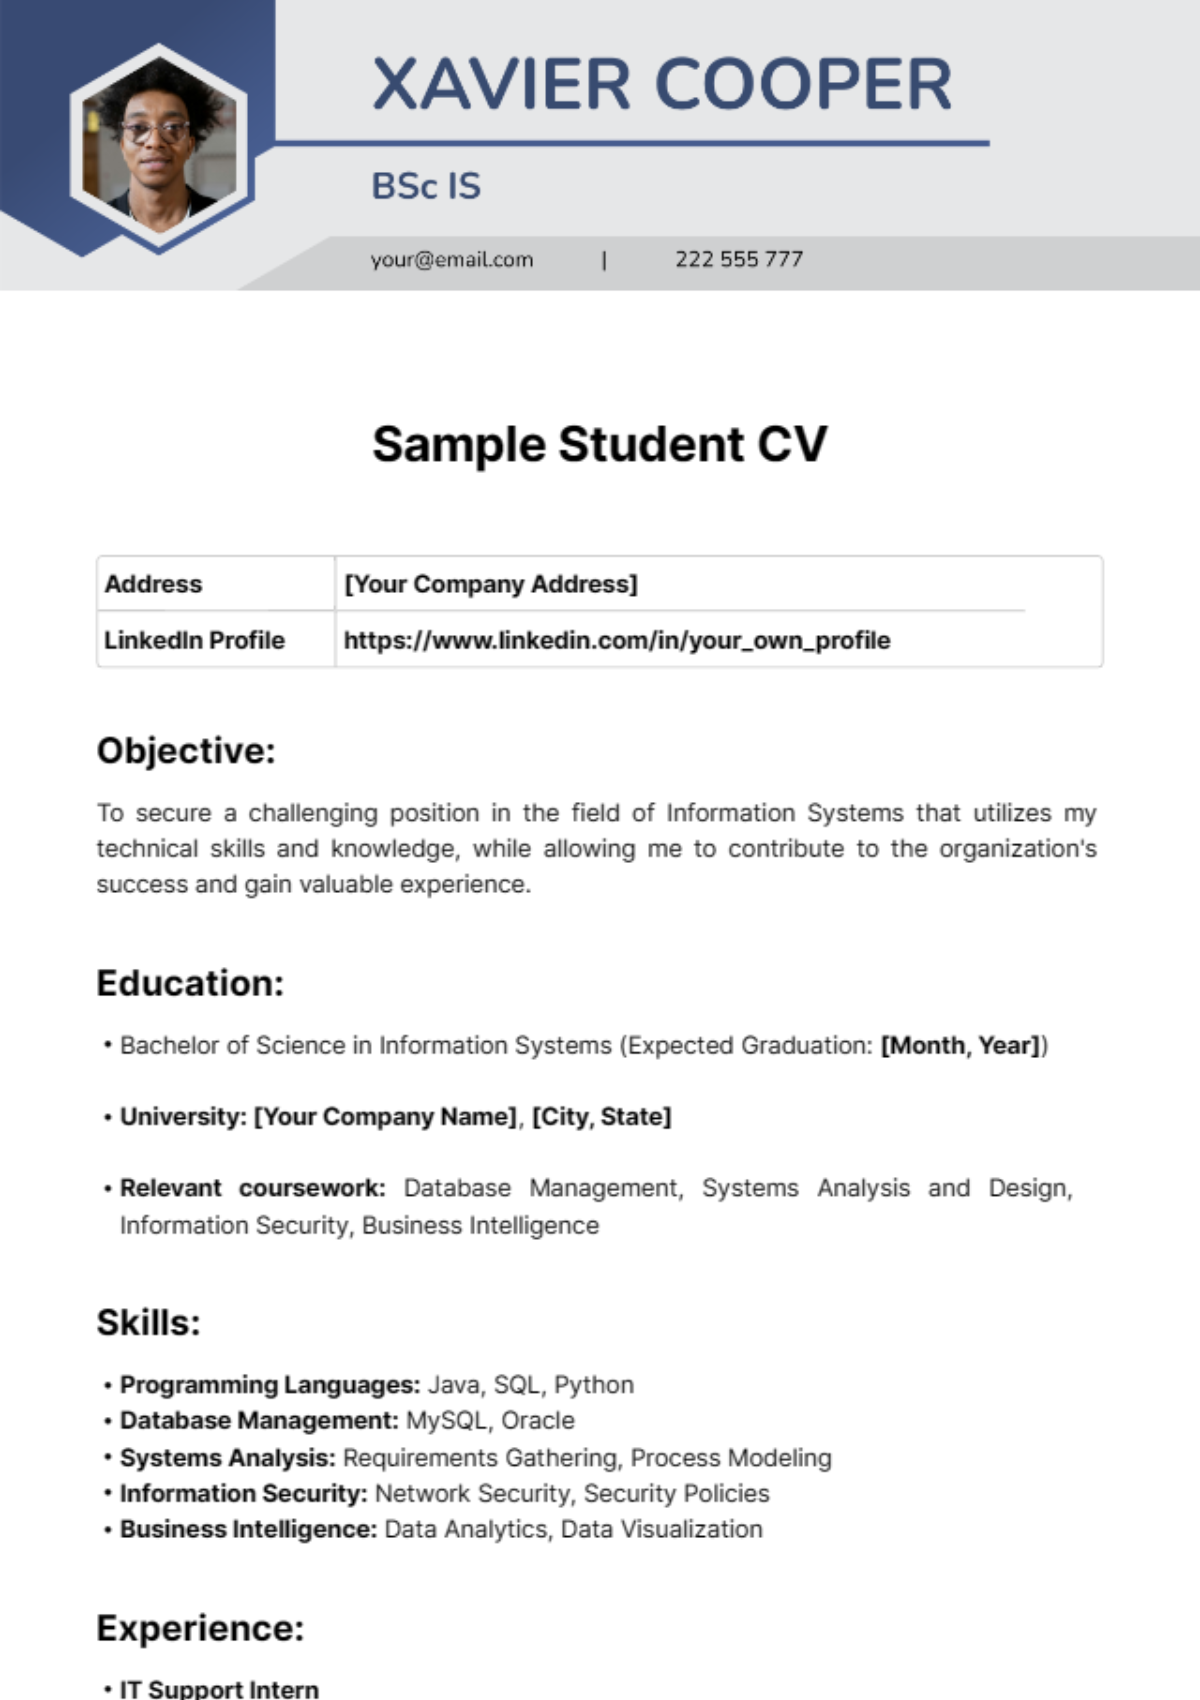 Free Sample Student CV Template